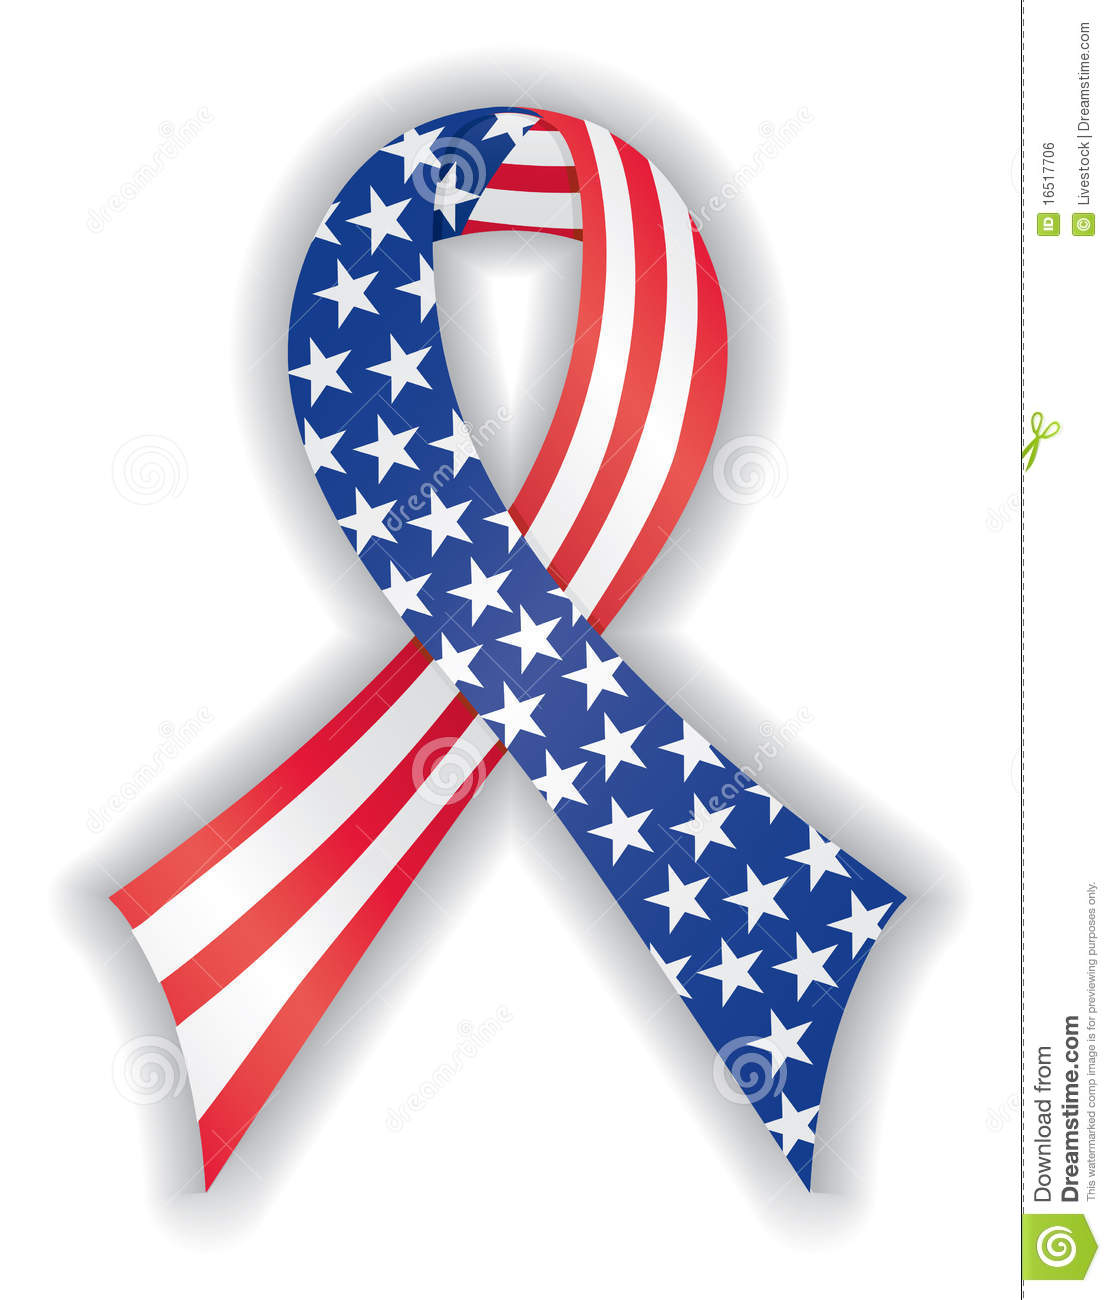 Smooth Satin Awareness Ribbon In American Flag Pattern Representing